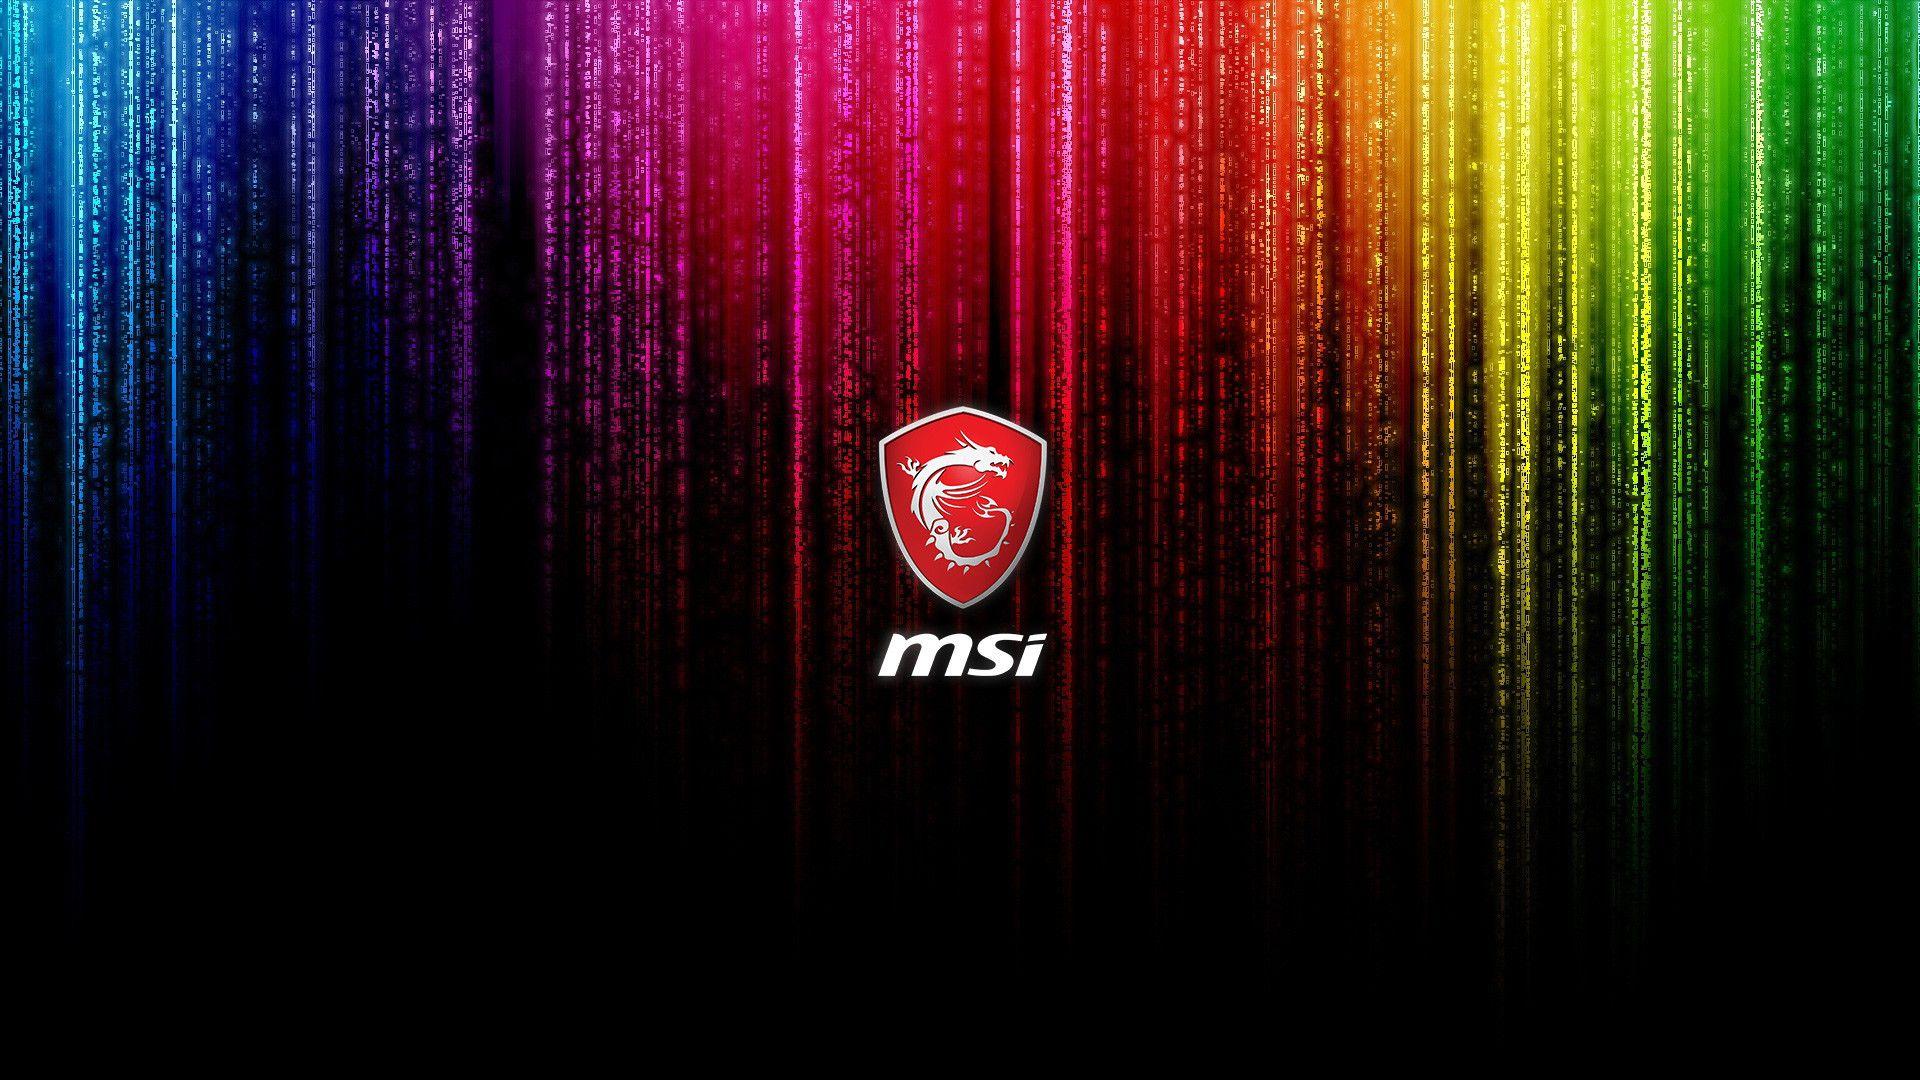 MSI HD Wallpaper